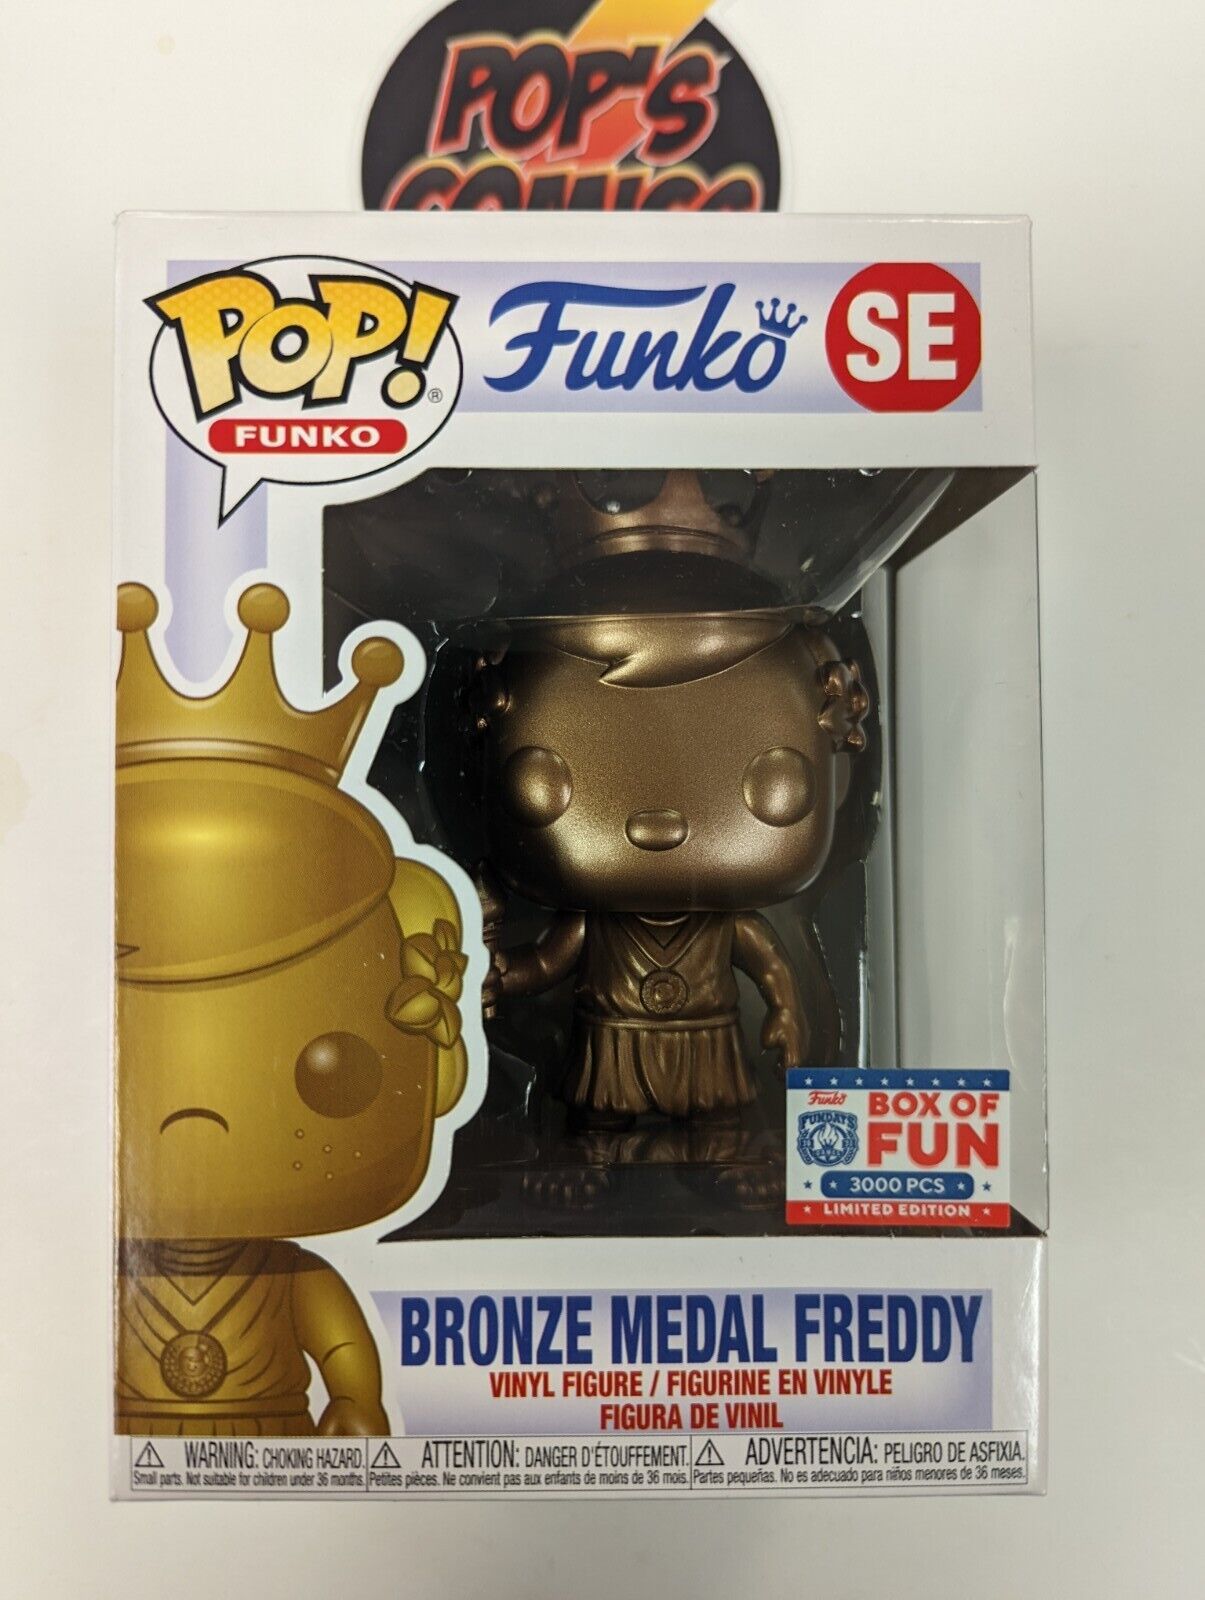 Funko Pop Bronze Medal Freddy SE Box Of Fun 3000 Pieces